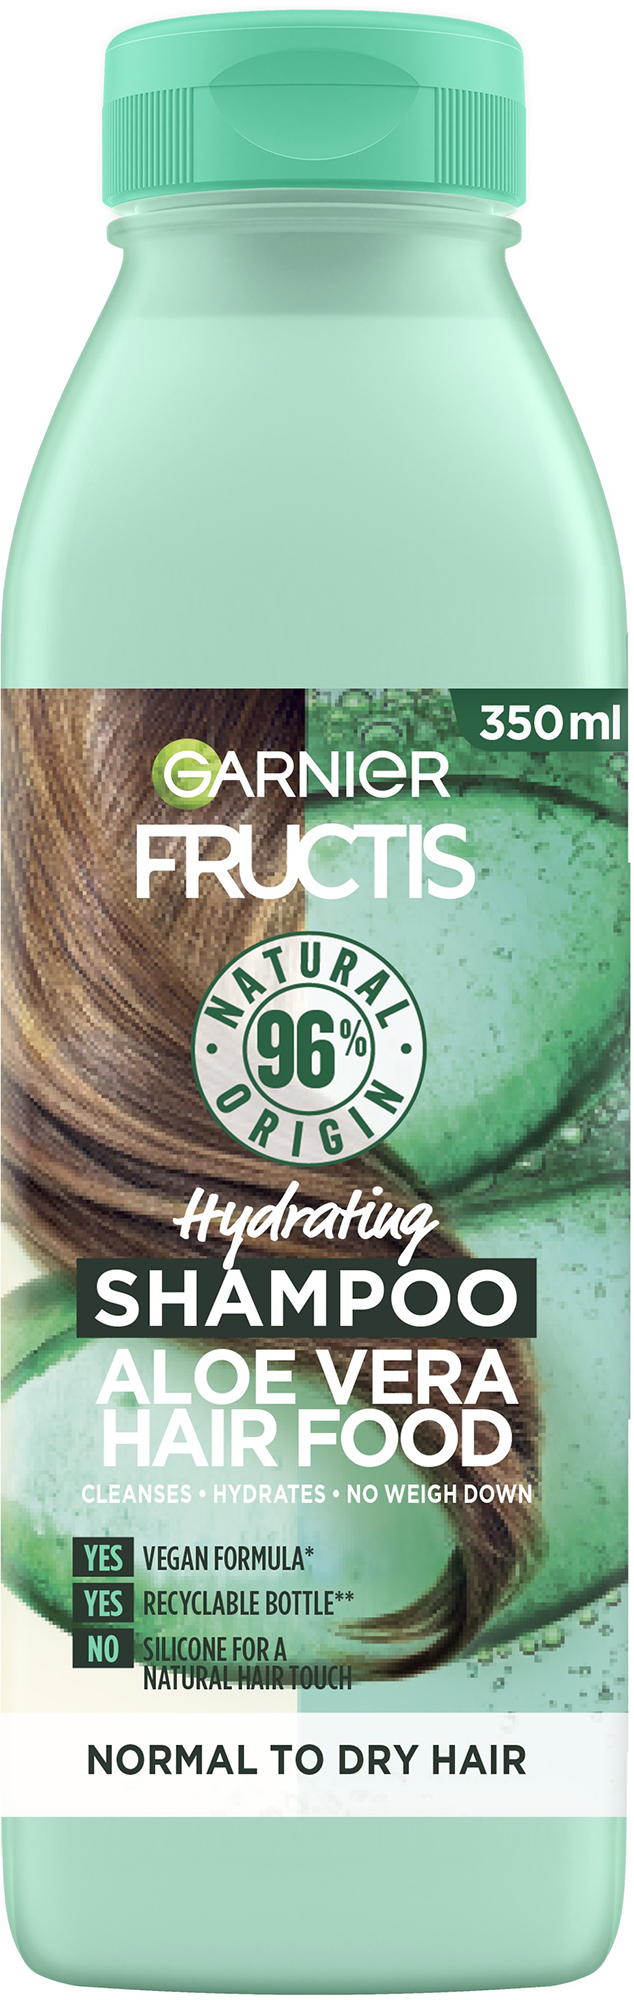 Garnier Fructis Hydrationg Shampoo Aloe Vera Hair Food 350 ml 